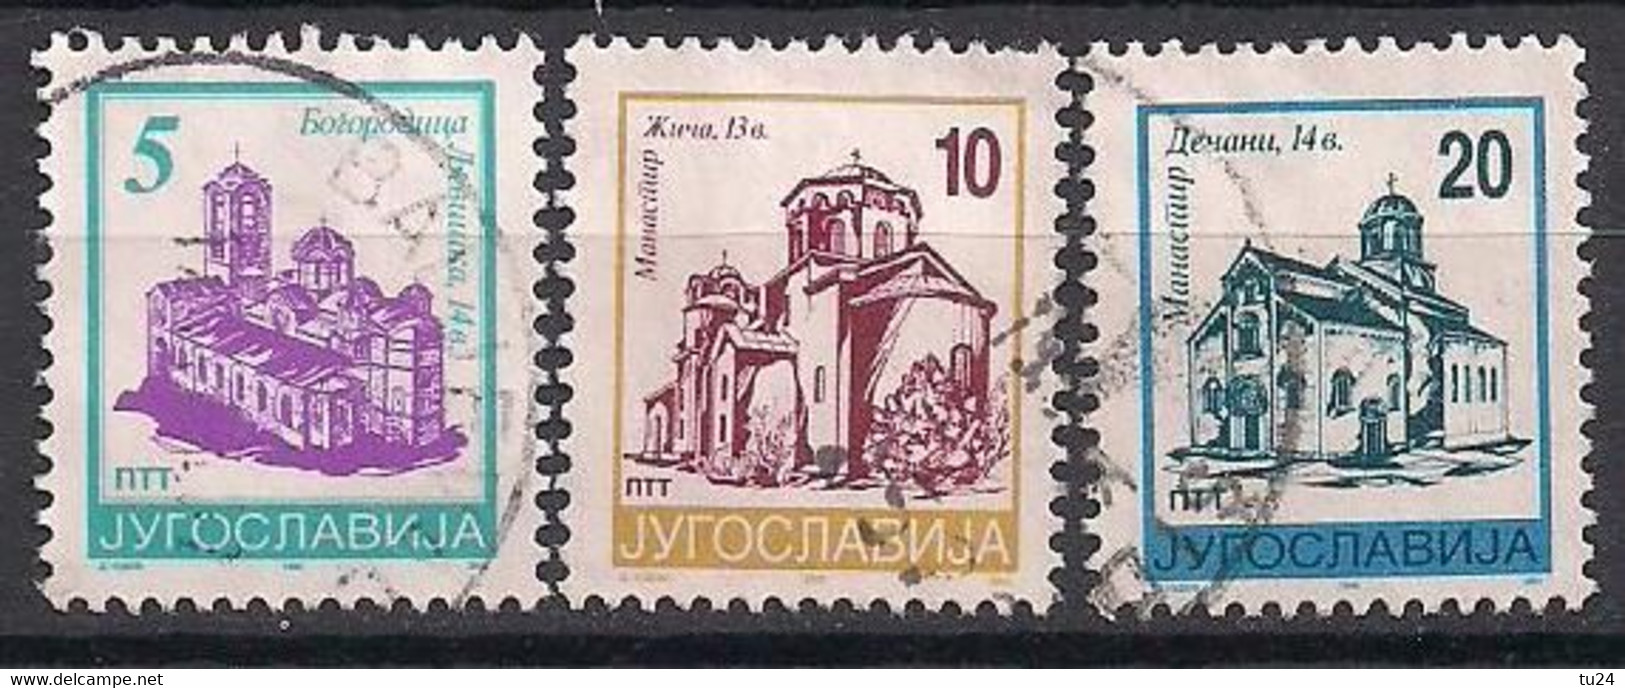 Jugoslawien (1996)  Mi.Nr.  2755 - 2757  Gest. / Used  (6ci19) - Gebraucht